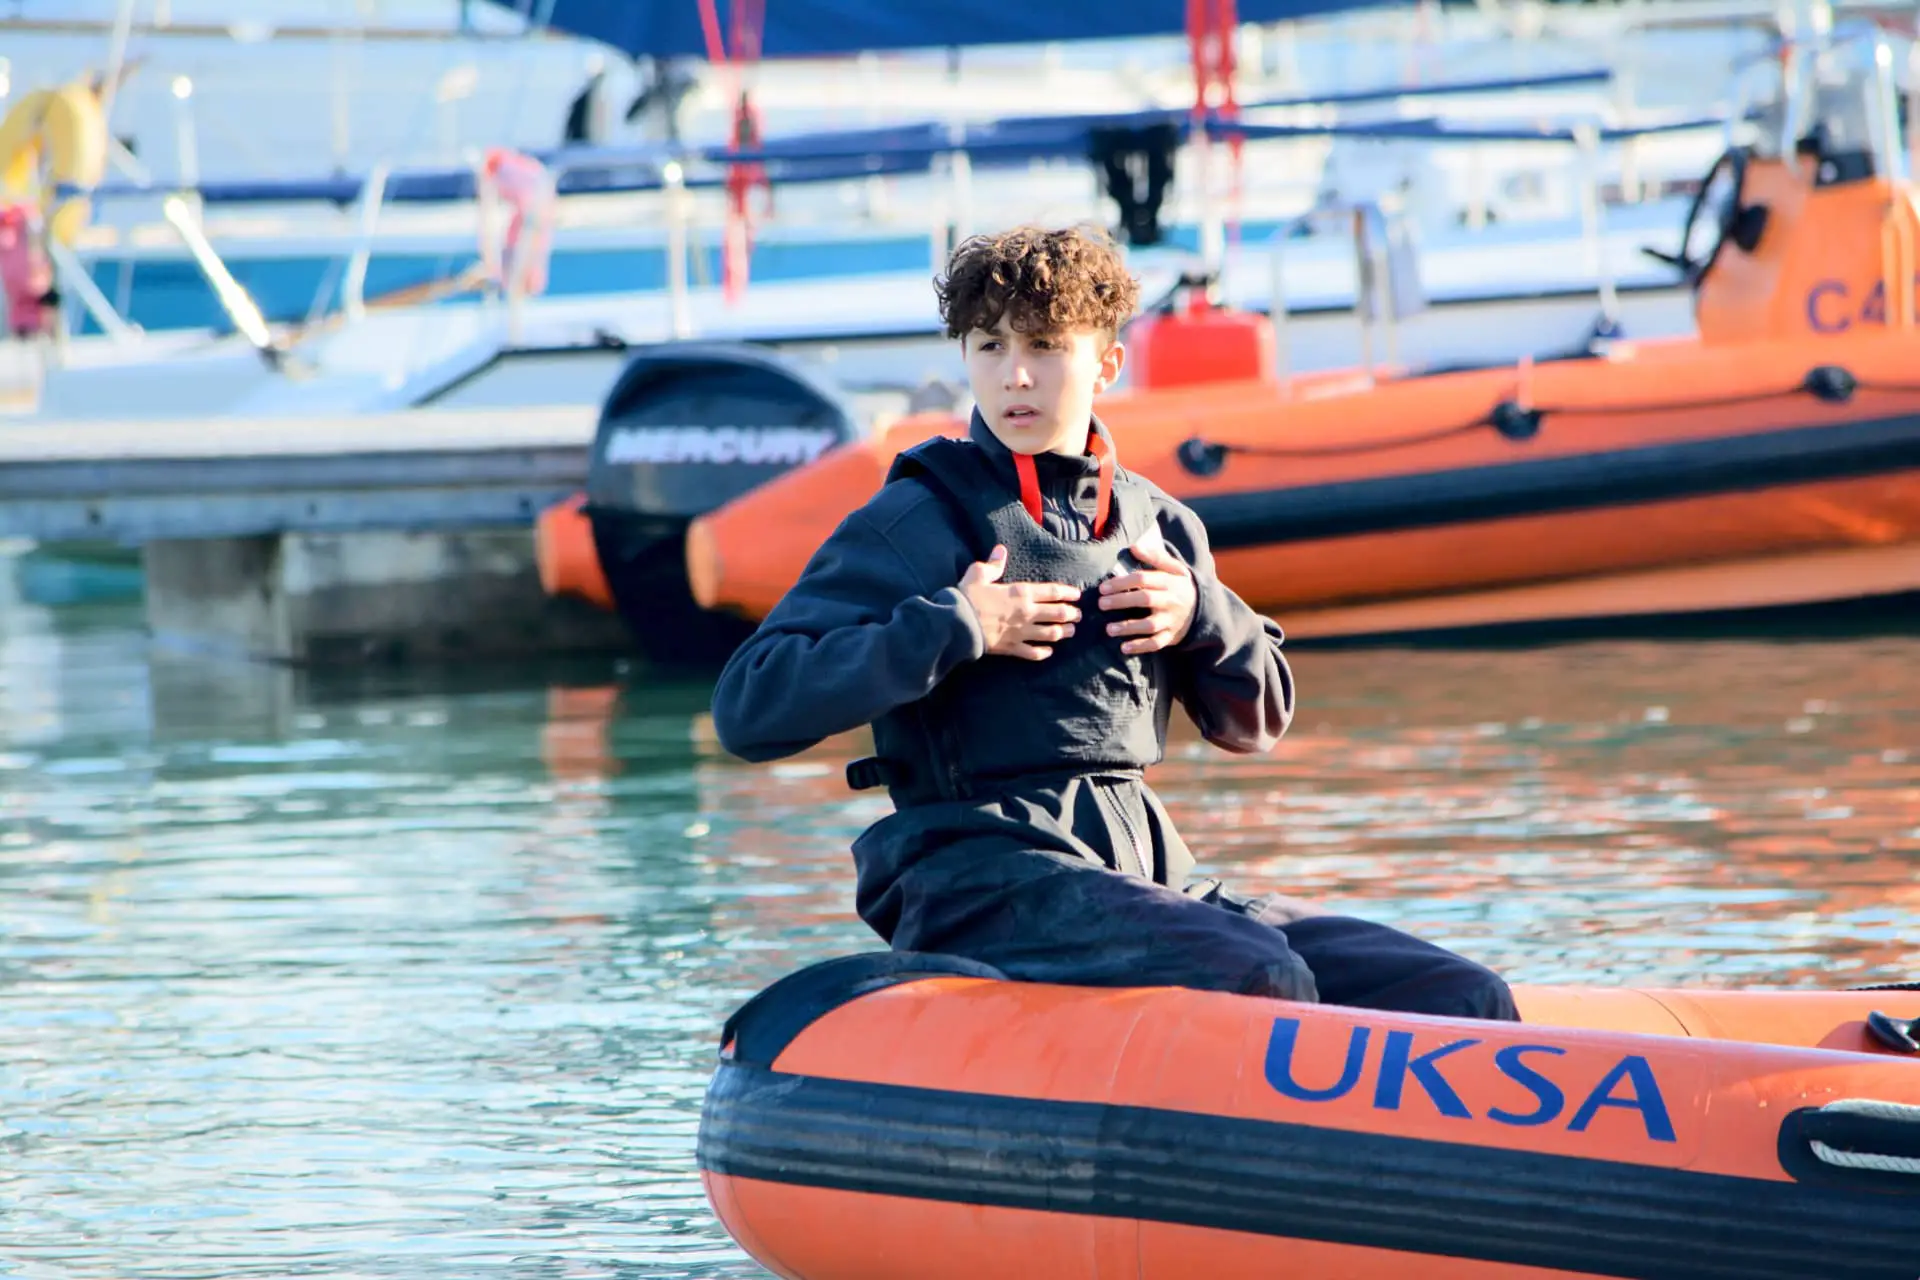 Raffy on UKSA’s Sea Change Foundation Programme in boat